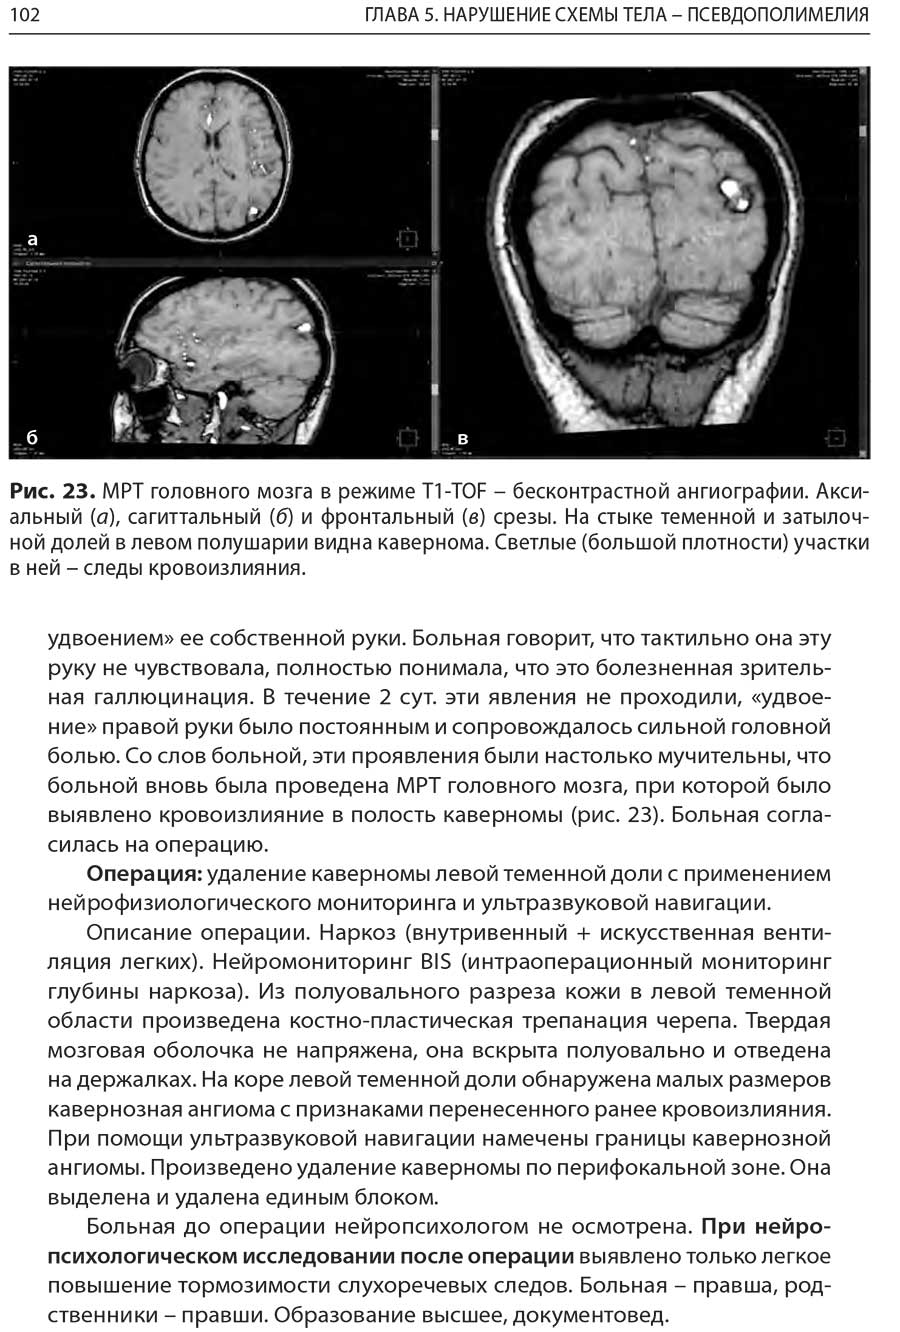 Рис. 23. MPT головного мозга в режиме T1-TOF